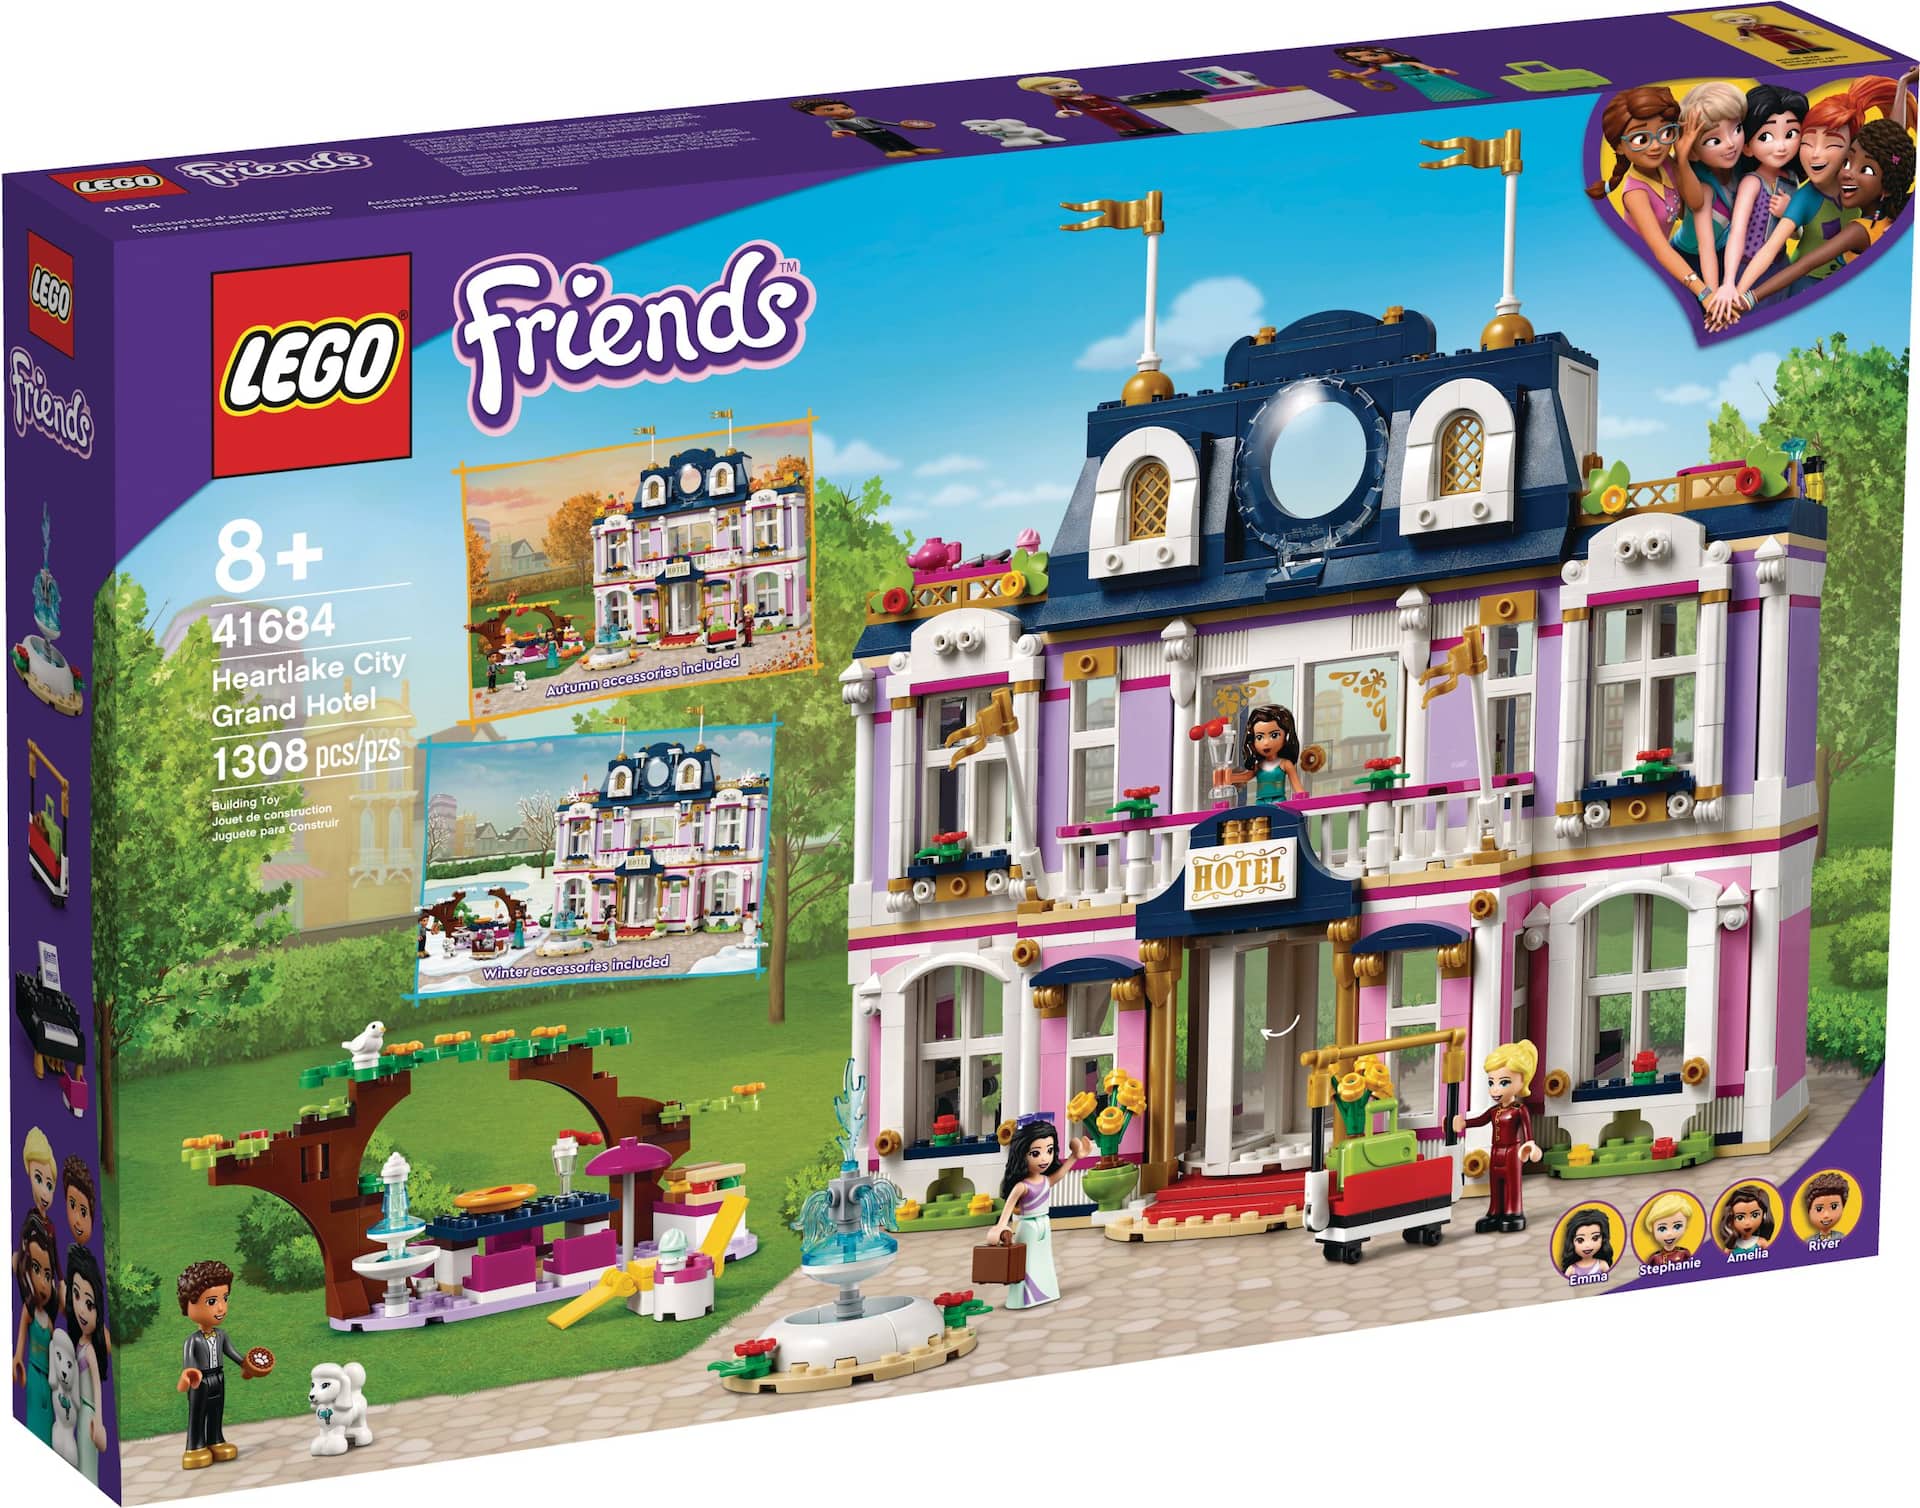 LEGO® Friends Heartlake City Grand Hotel (41684, 1308 pcs, Age 2+